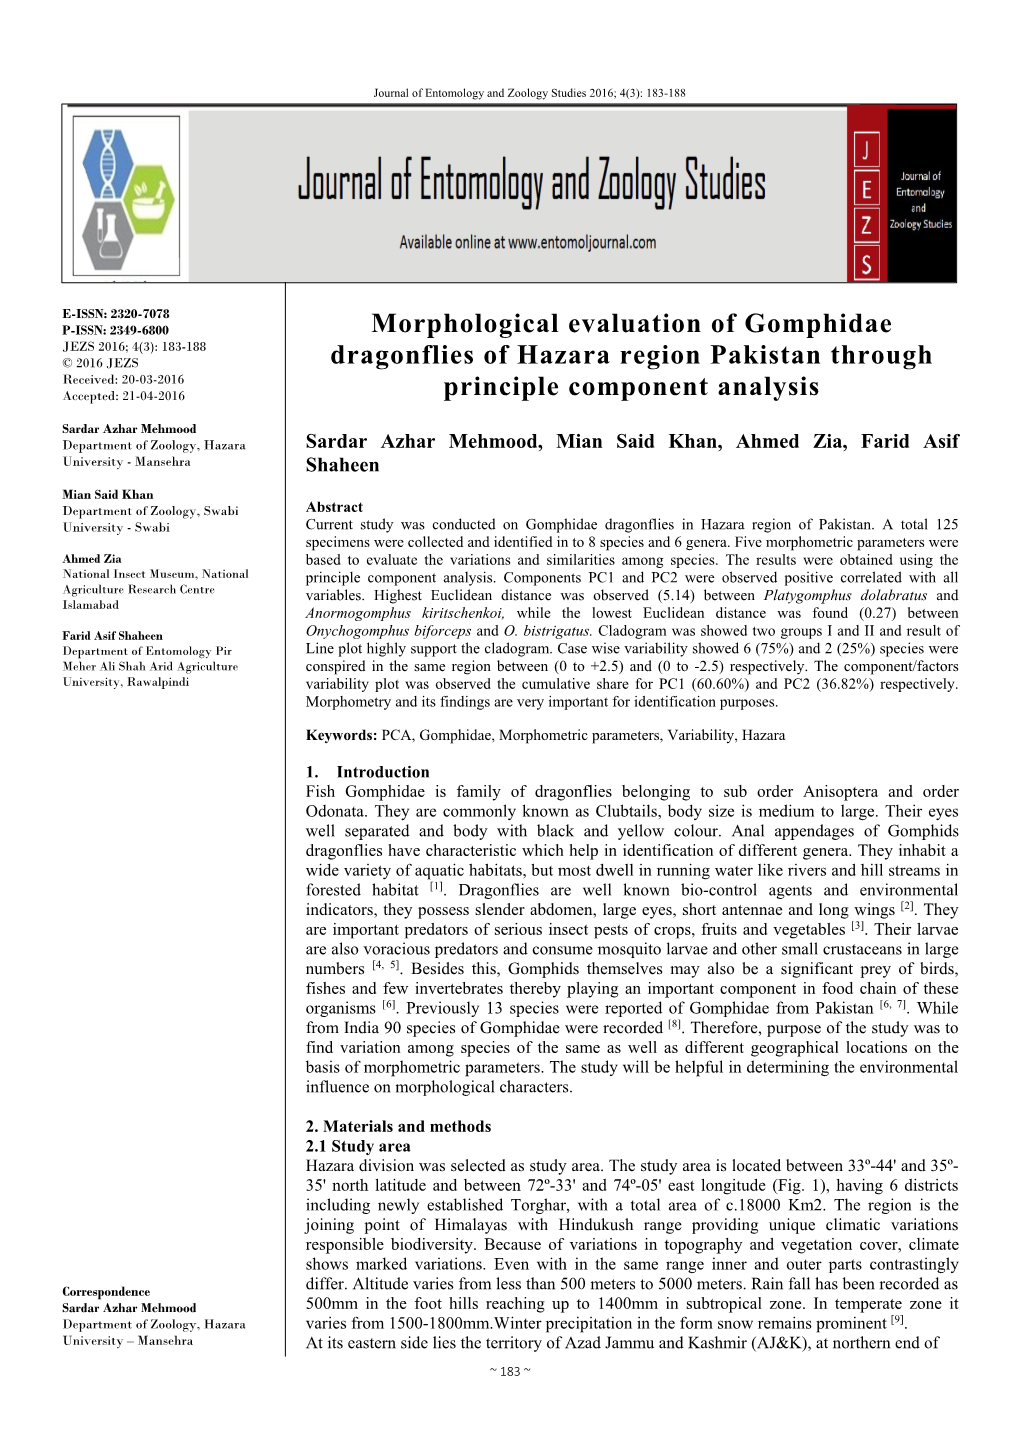 Morphological Evaluation of Gomphidae Dragonflies of Hazara Region Pakistan Through Principle Component Analysis